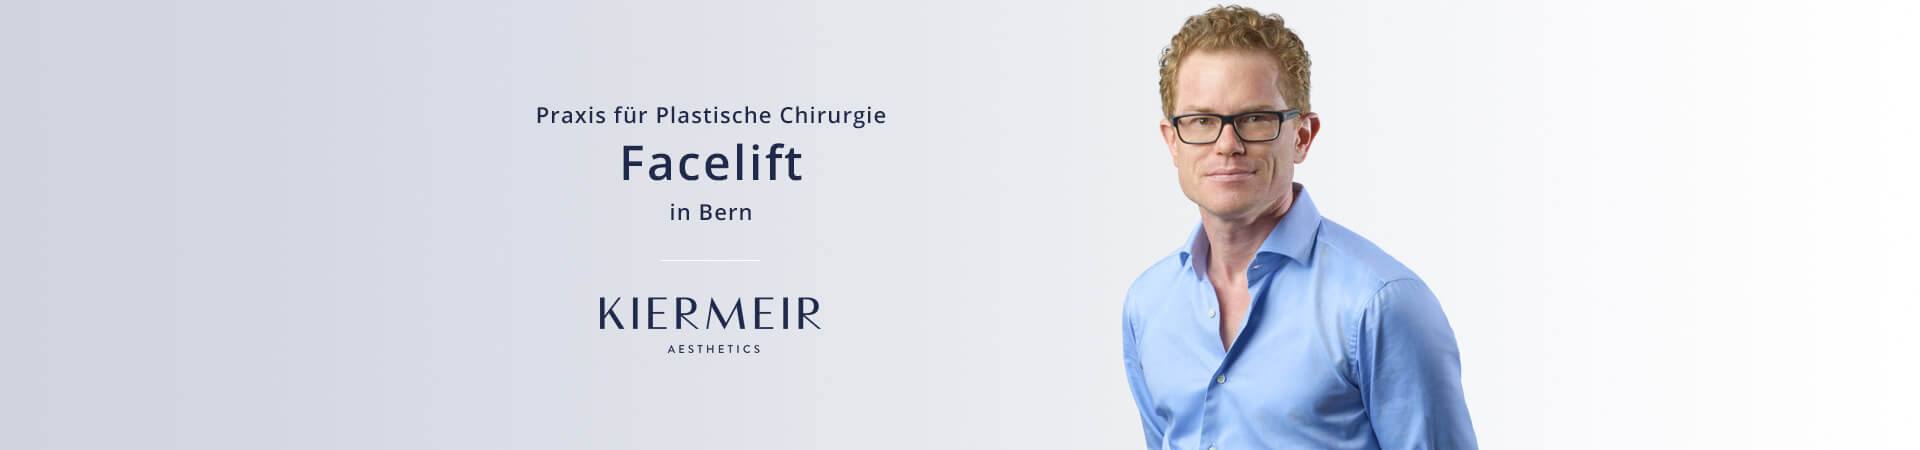 Facelift in Bern - Dr. David Kiermeir 